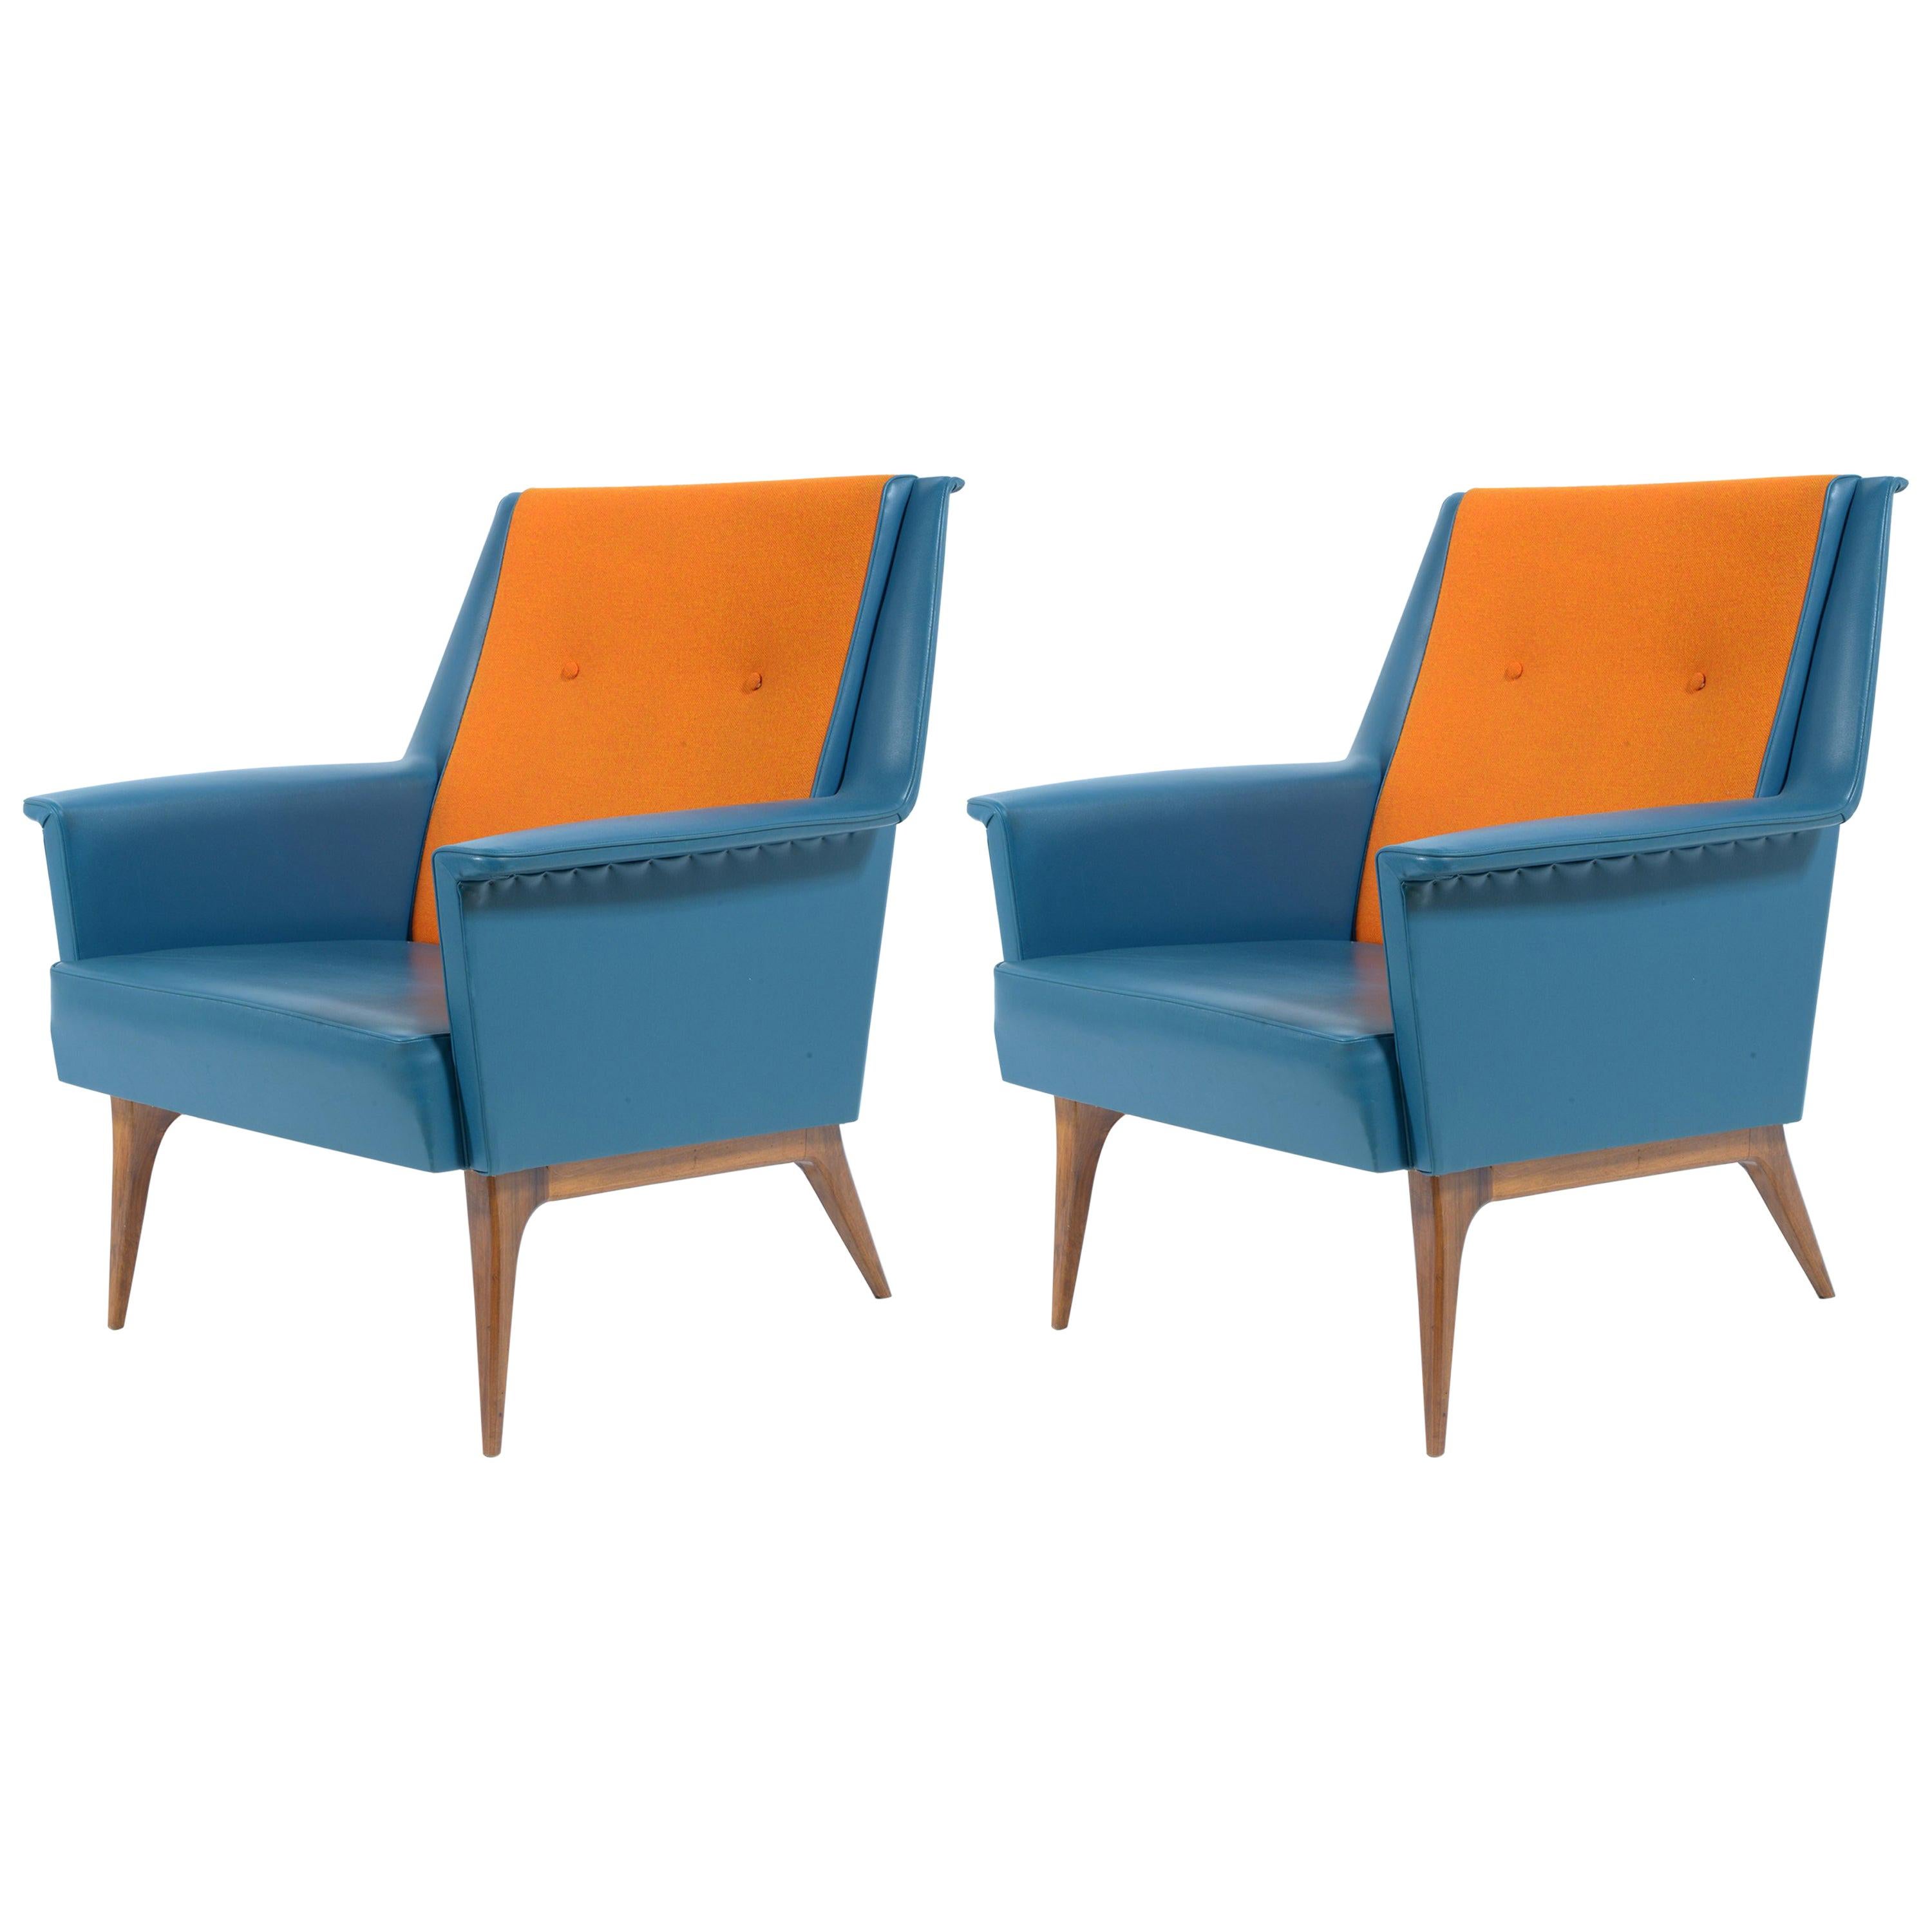 Castelli Signed Midcentury Pair of Armchairs Original Orange-Bleu Upholstery For Sale